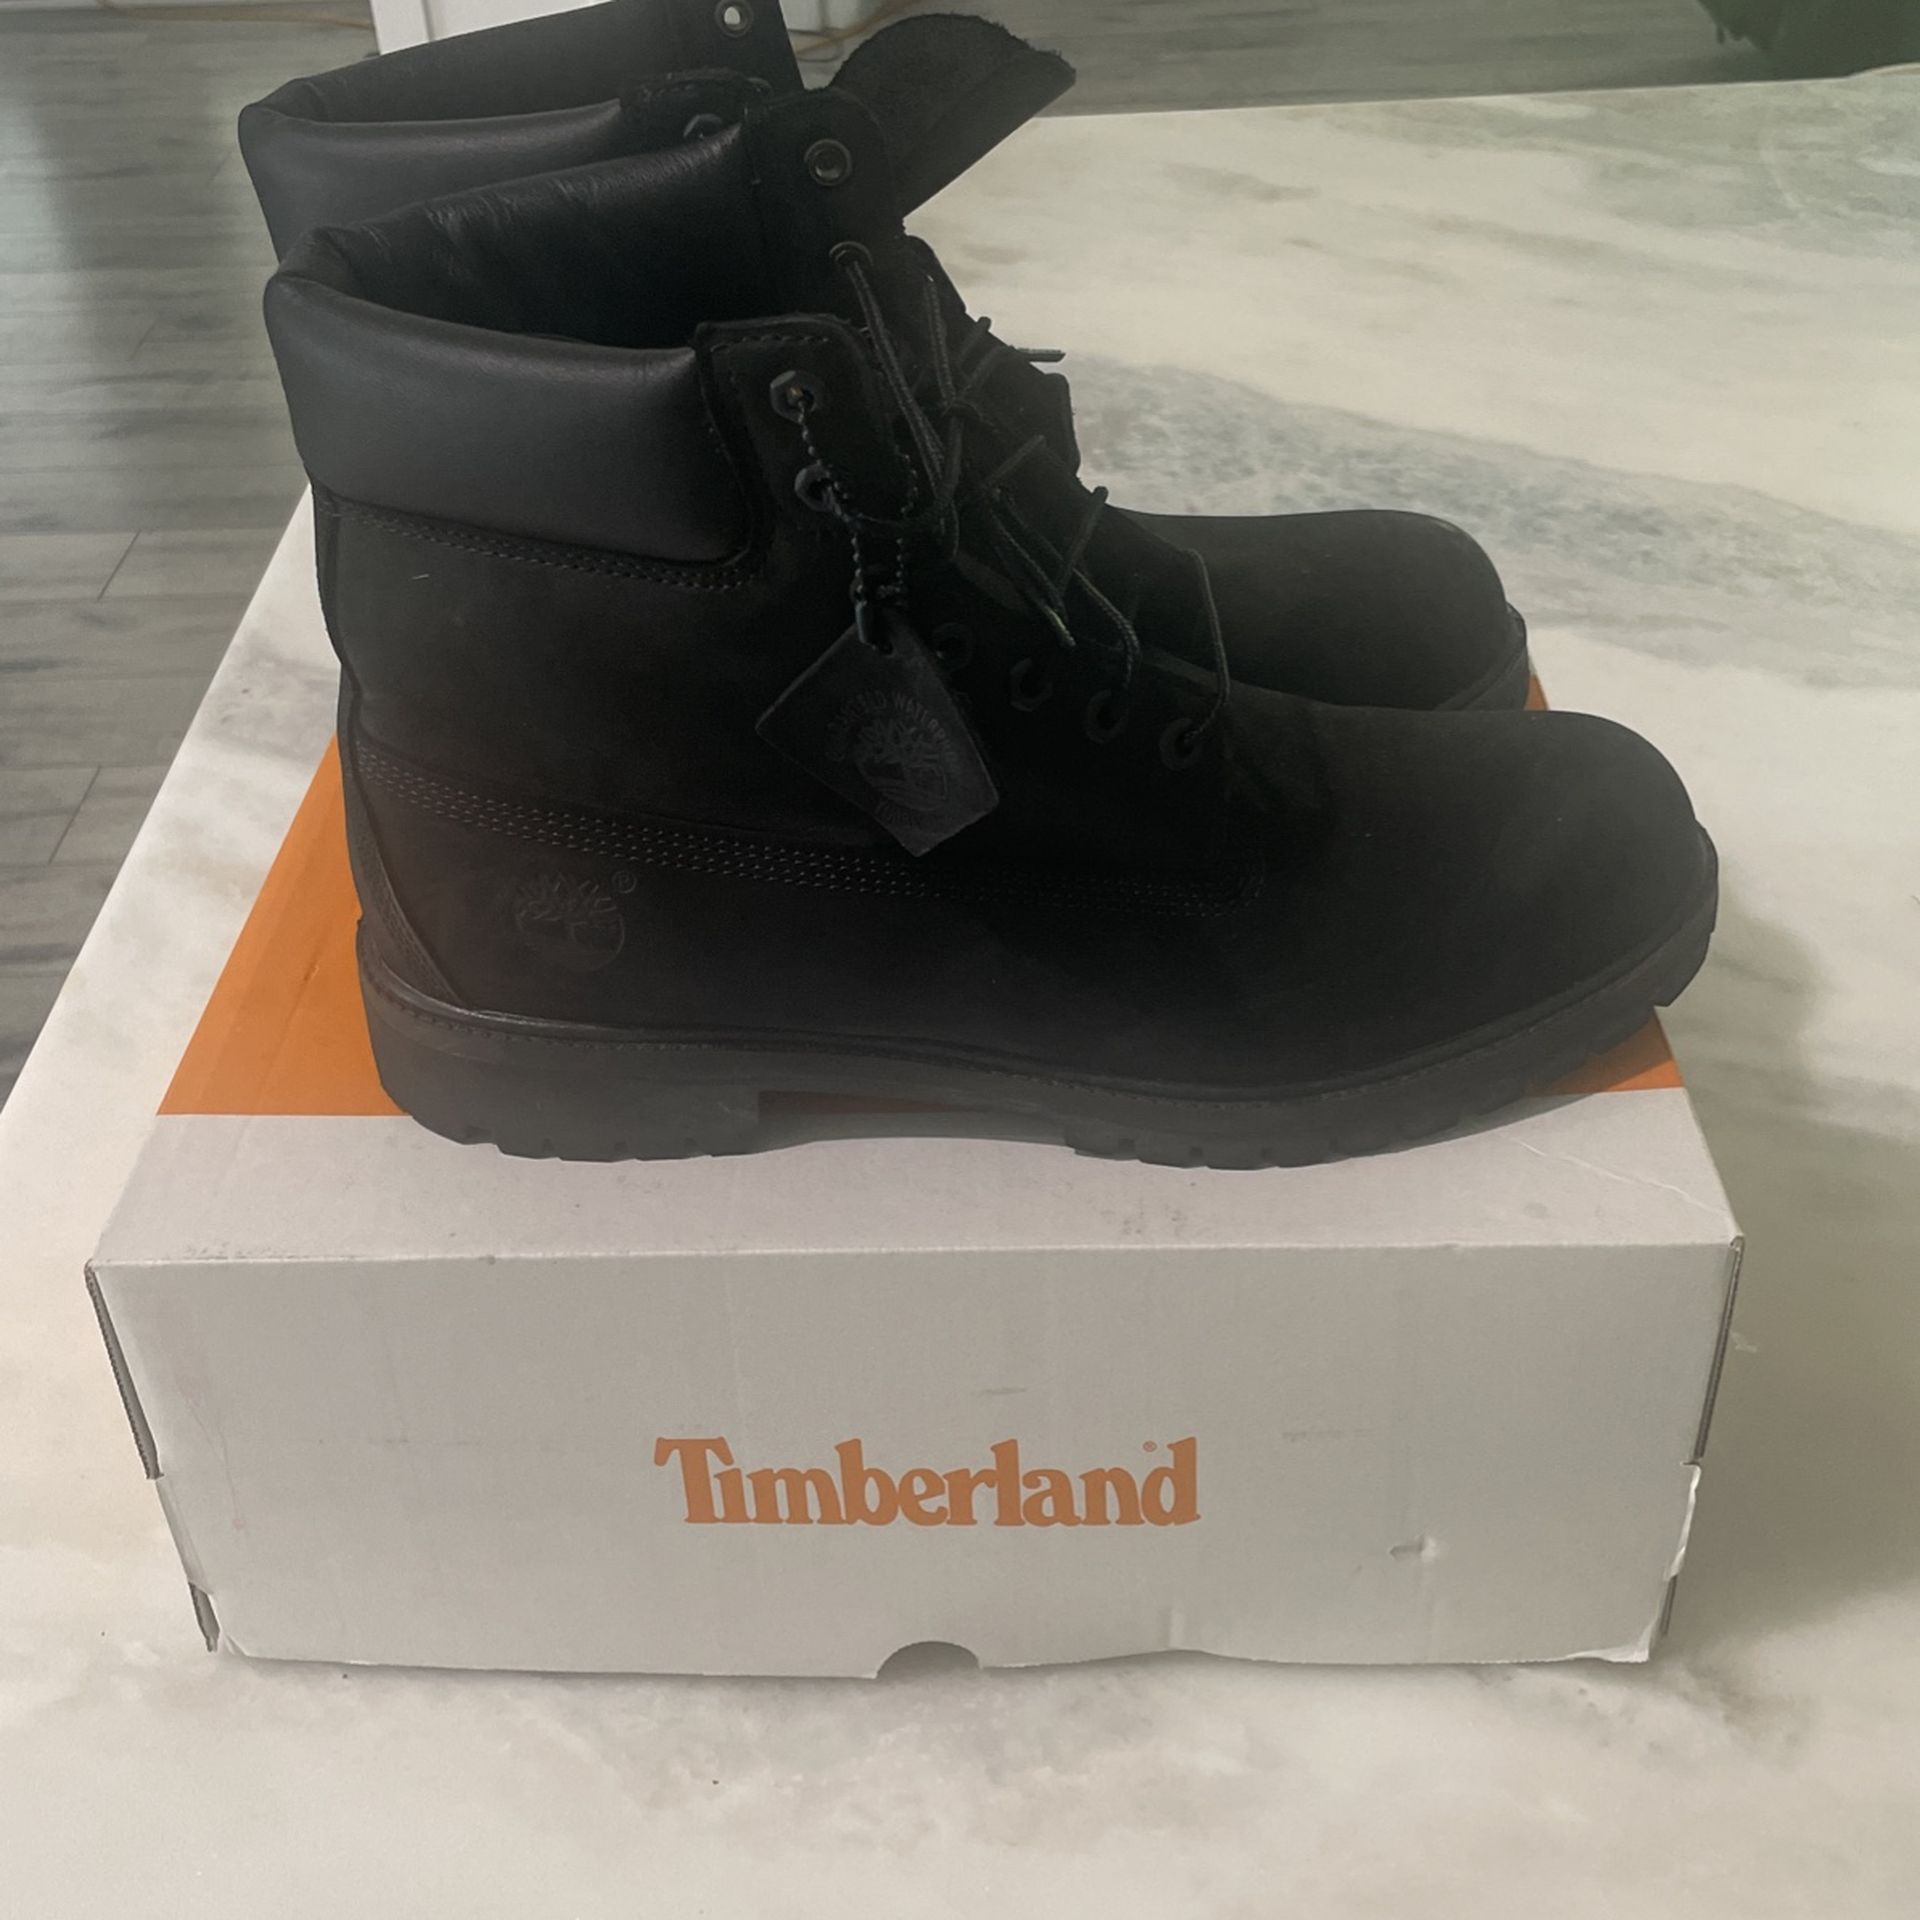 Size 12 Timberland Boots